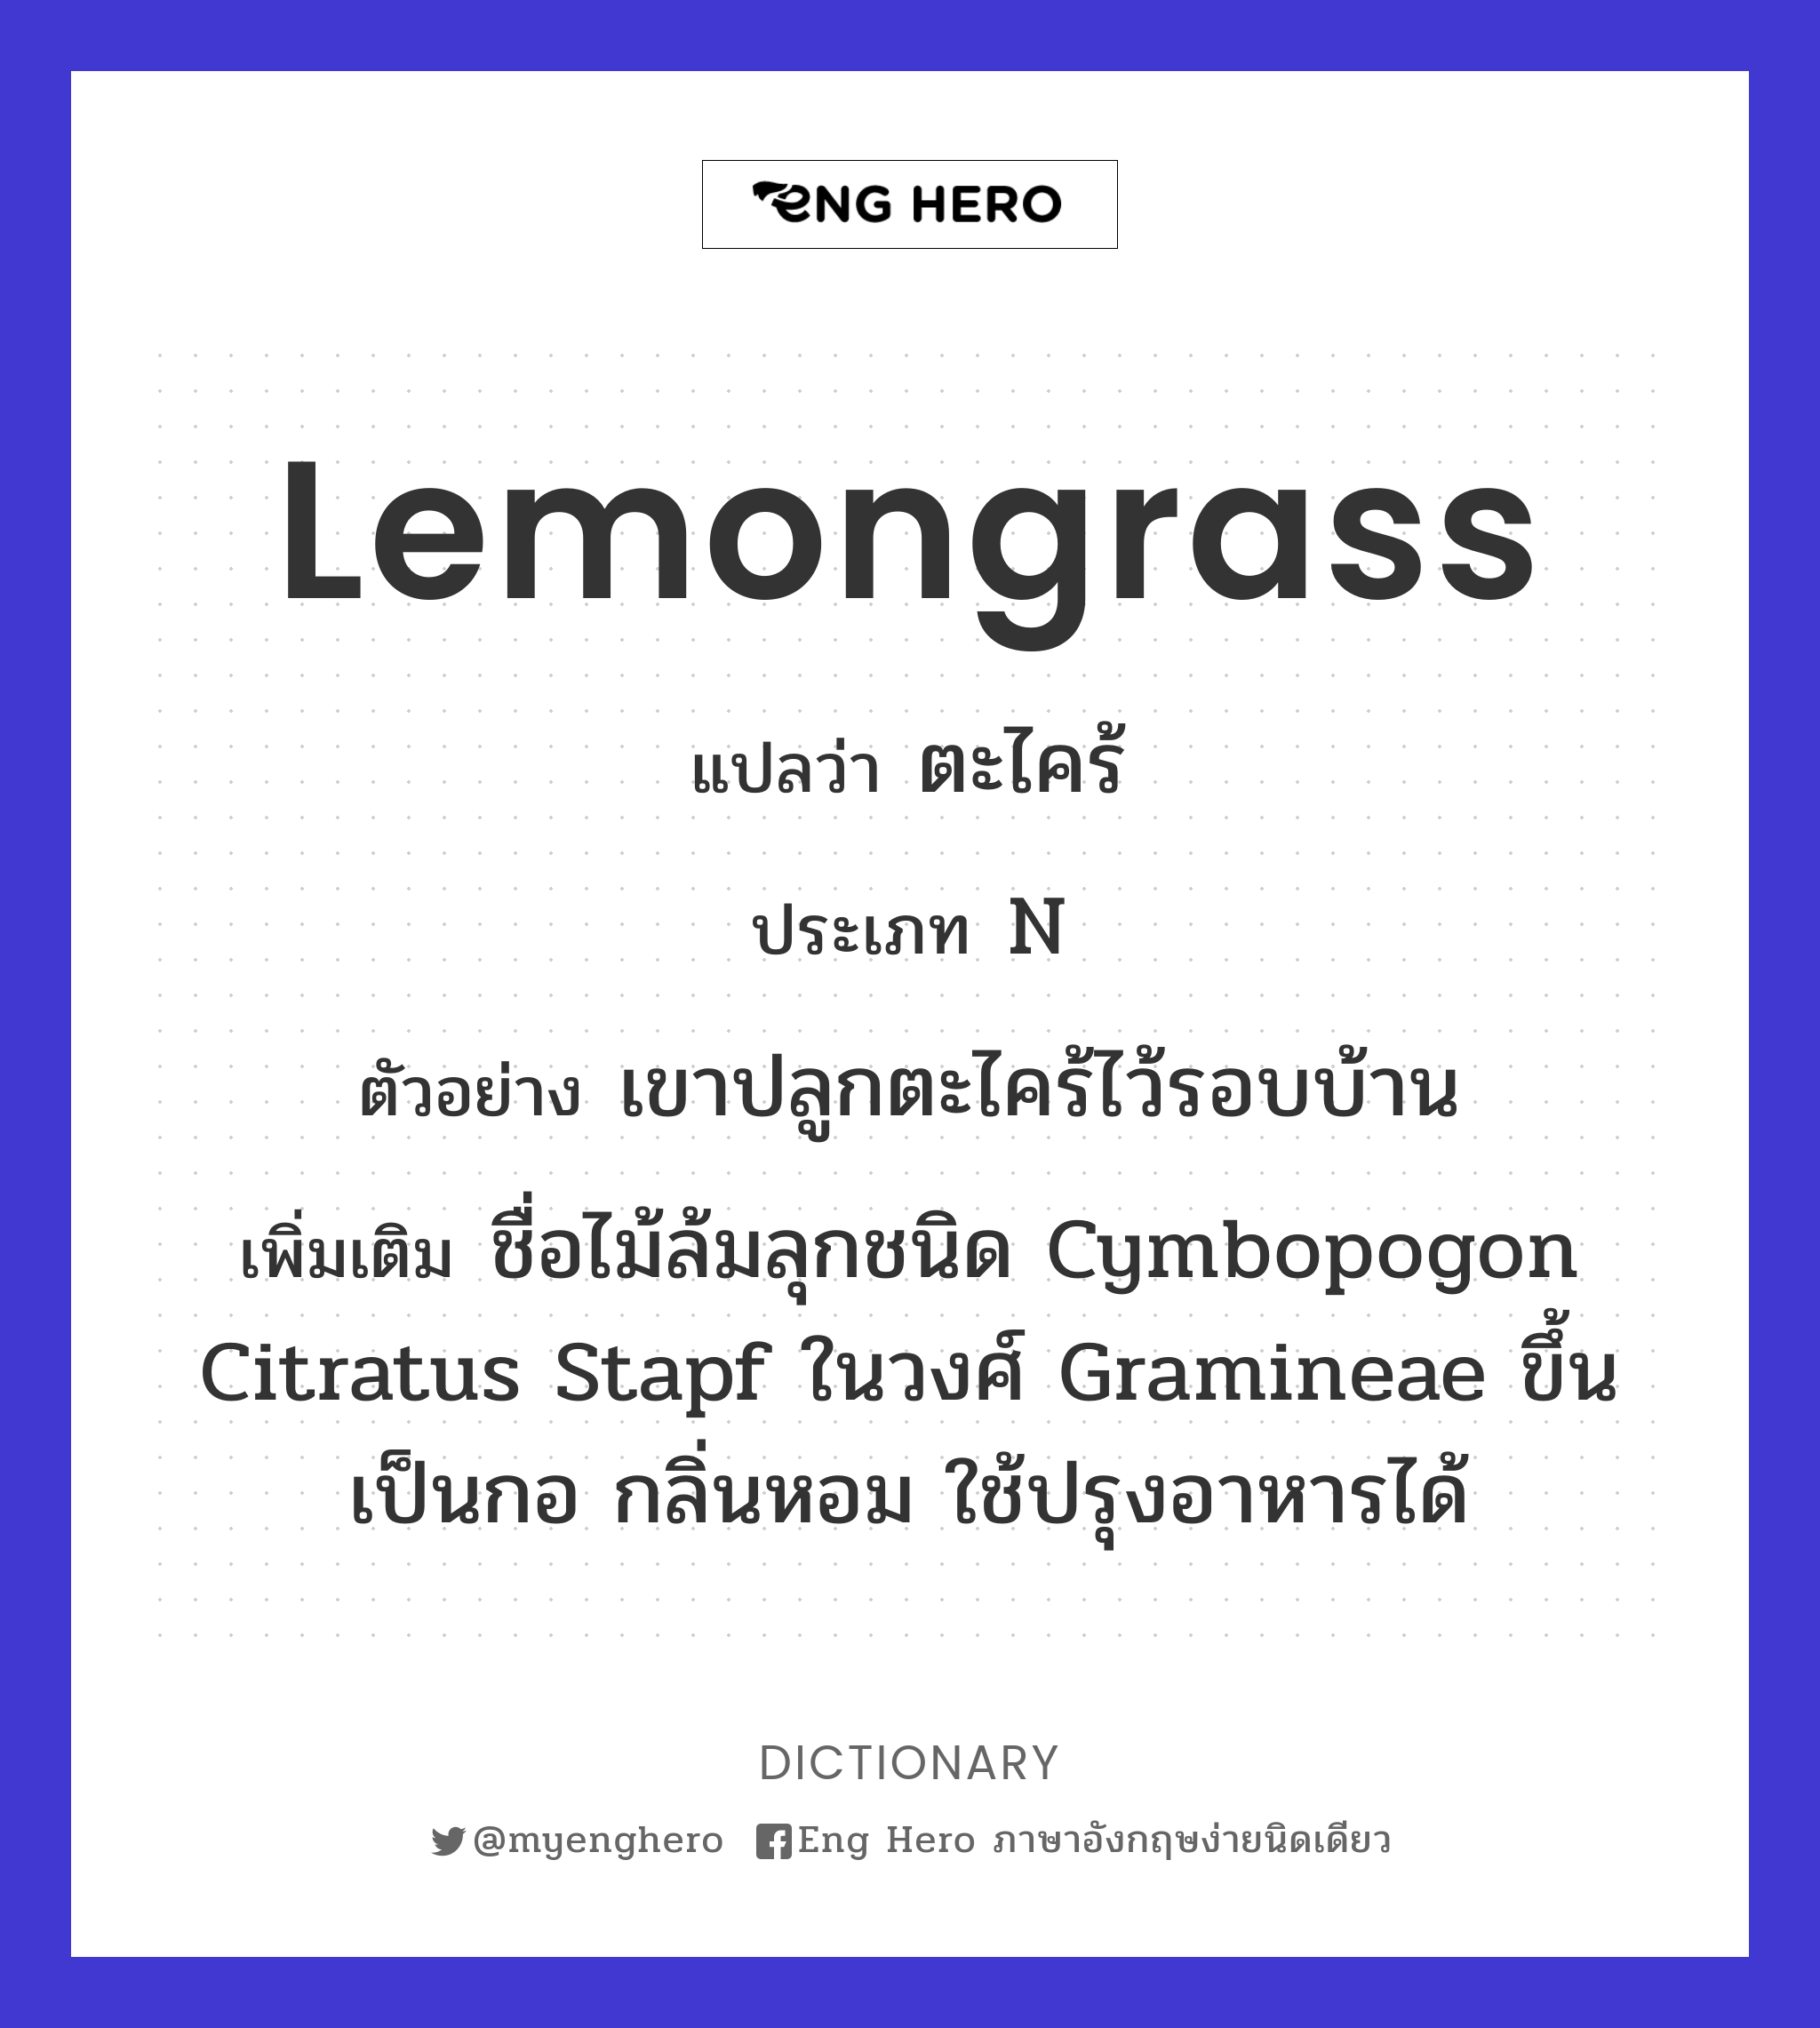 lemongrass